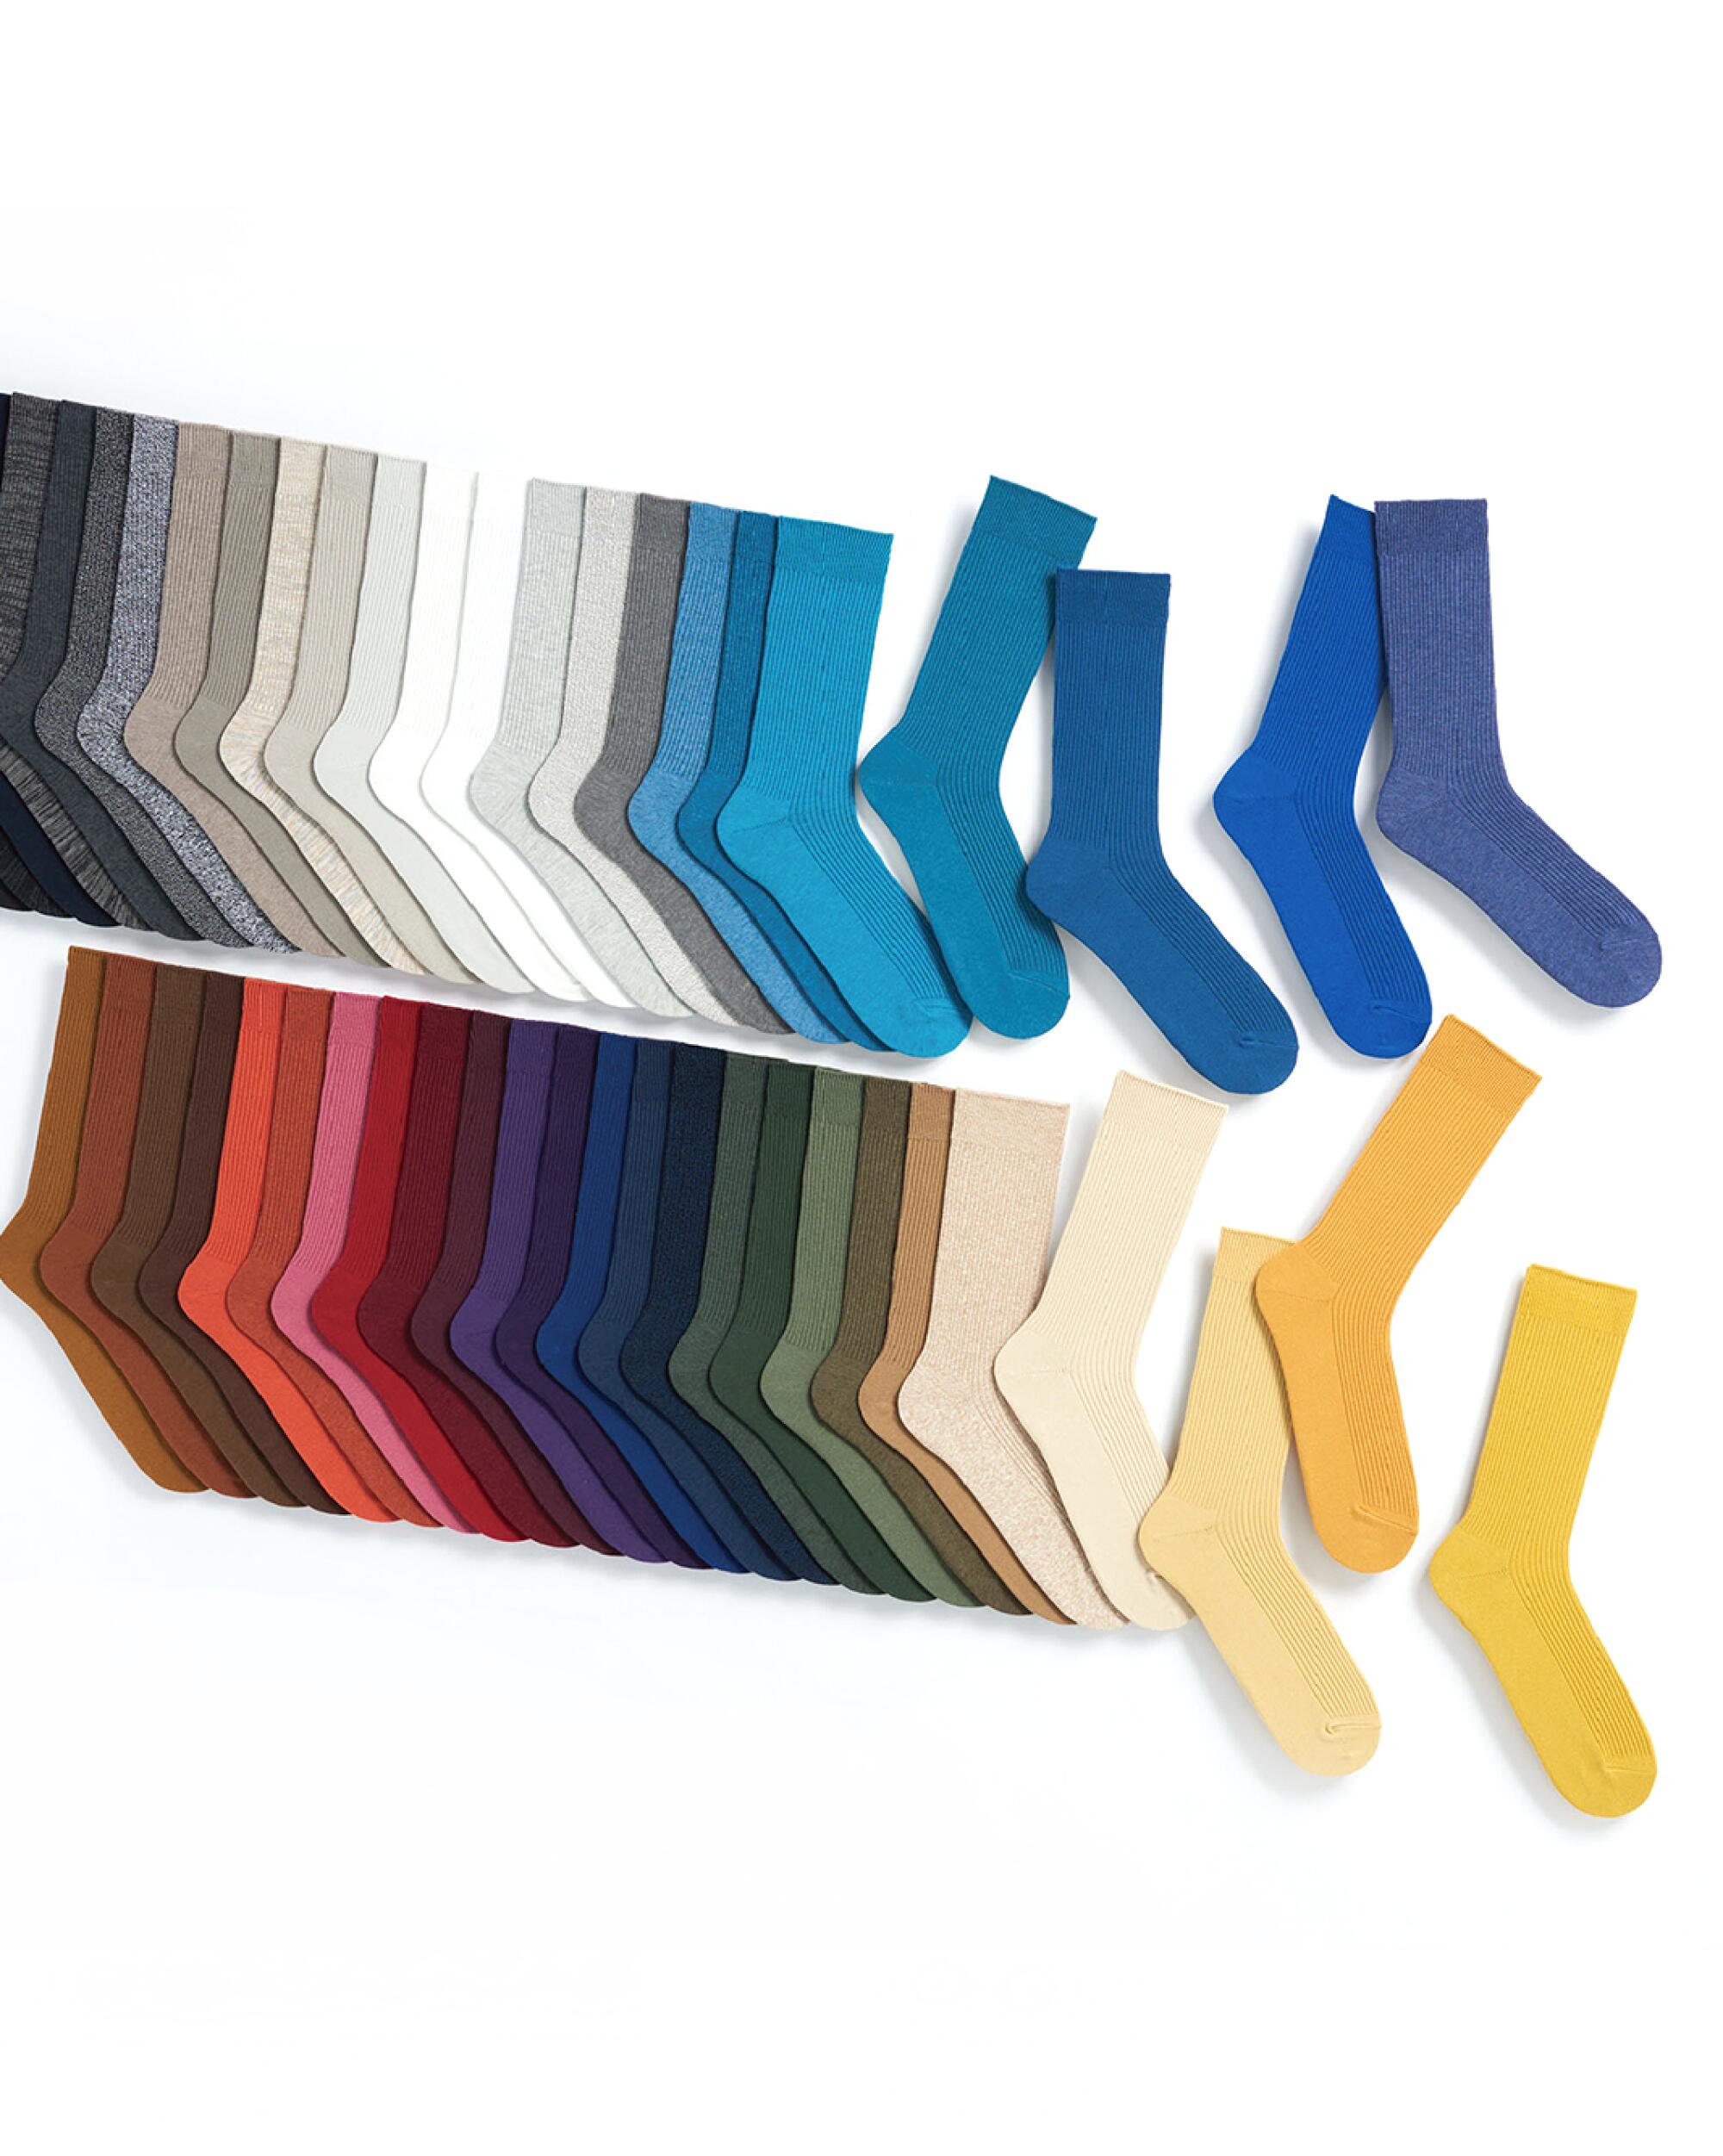 Colorful unisex socks by Uniqlo 